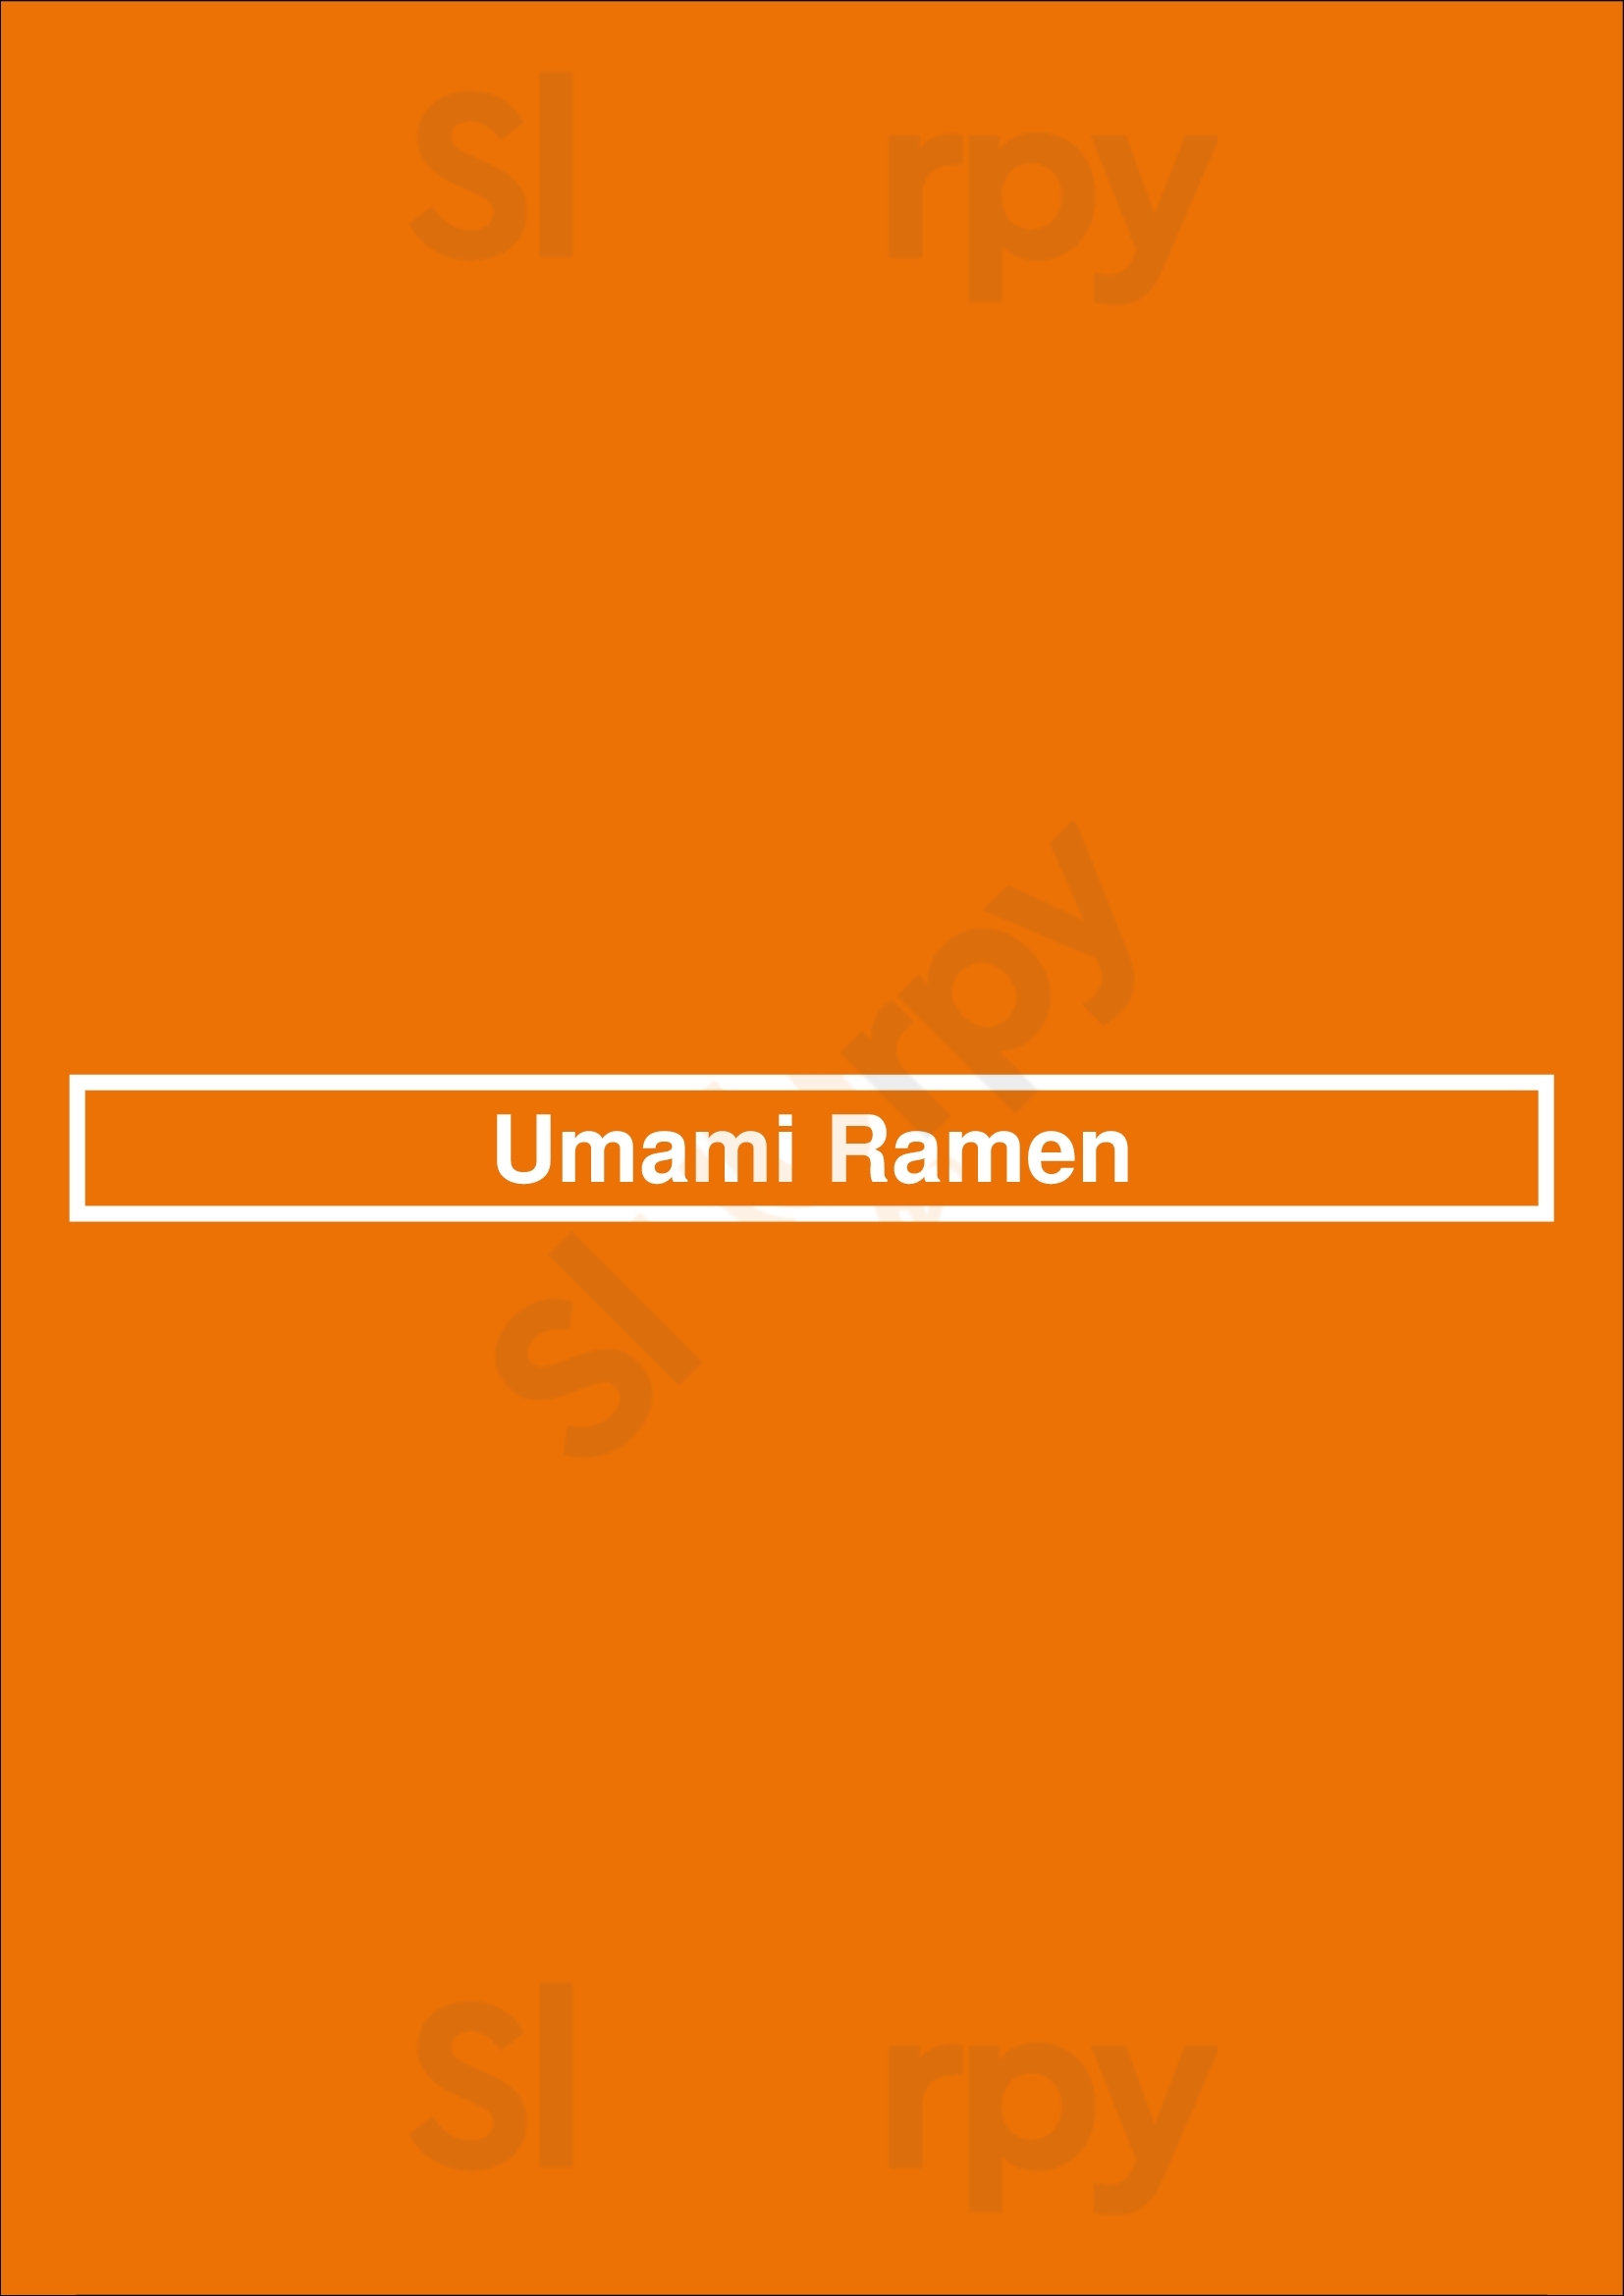 Umami Ramen Madison Menu - 1